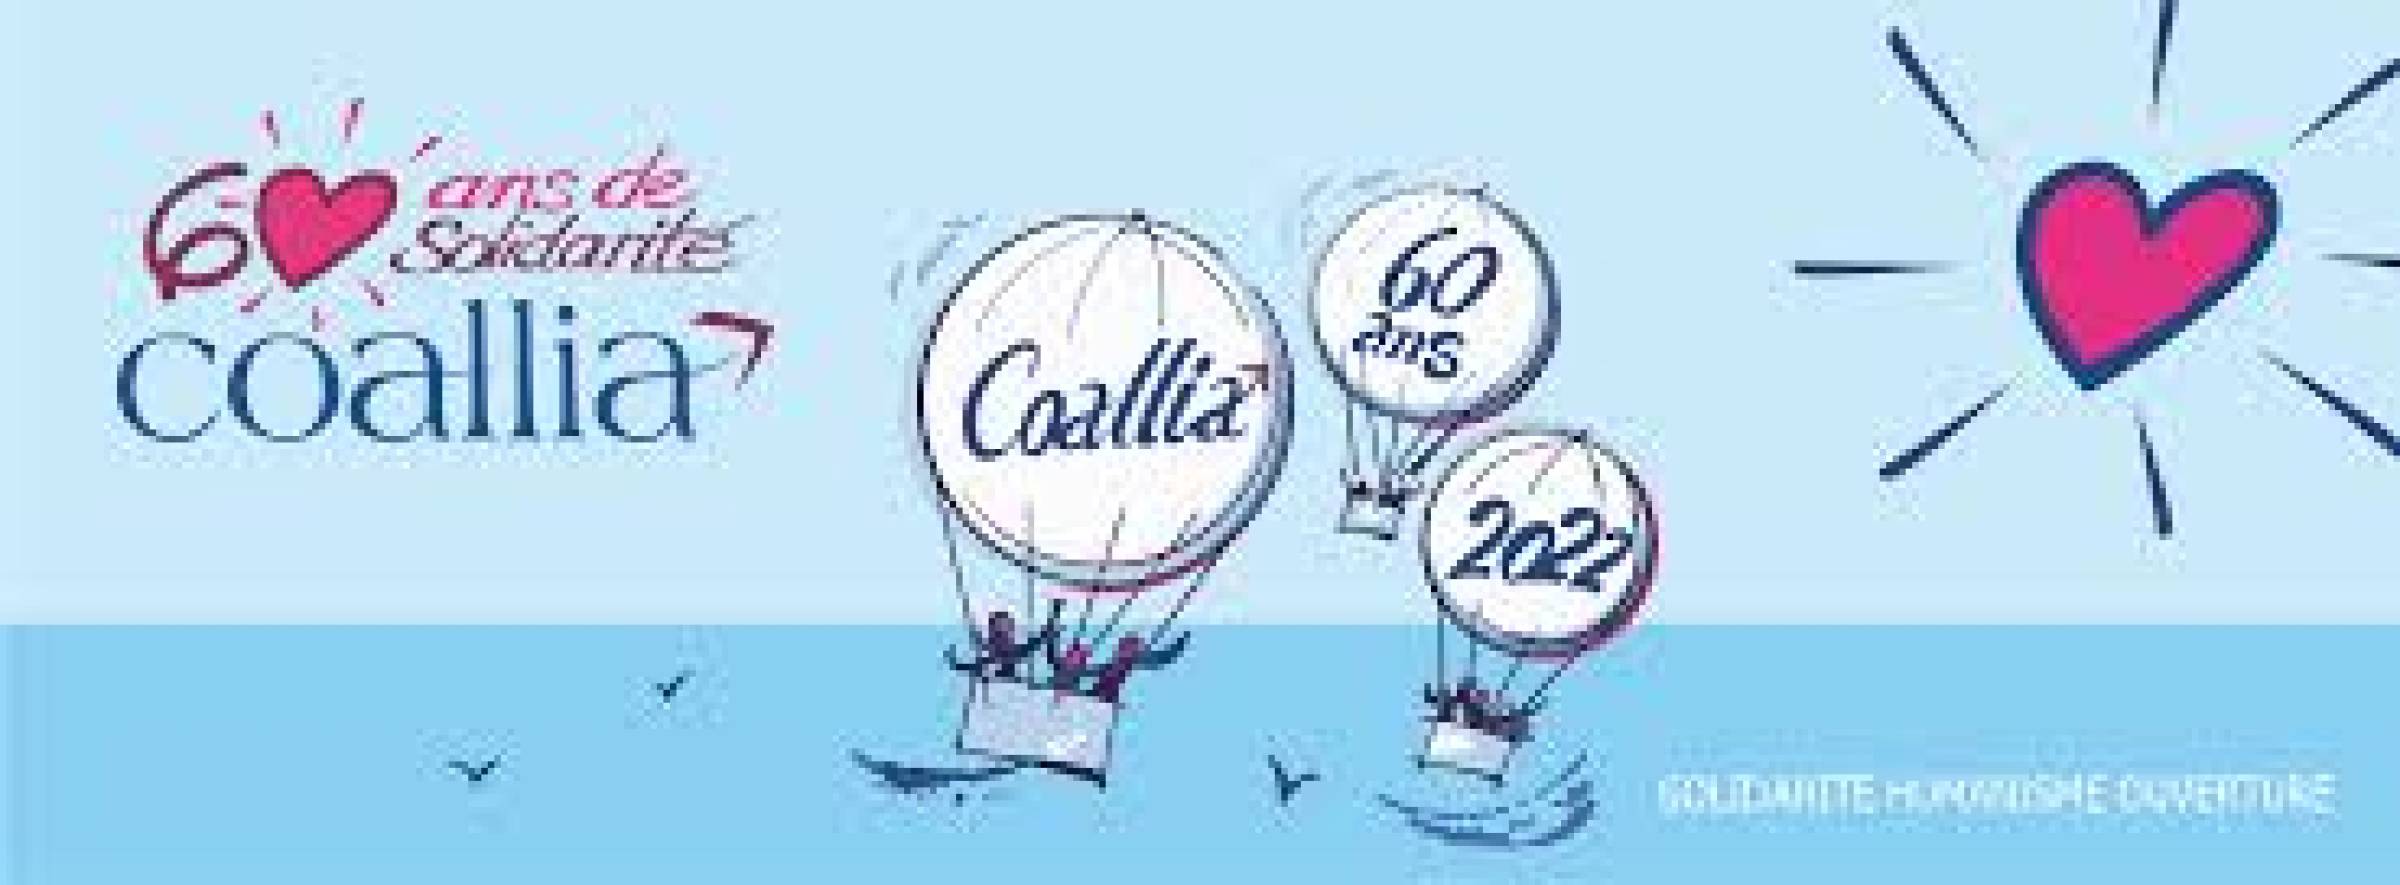 Coallia, a prominent organization dedicated to social welfare